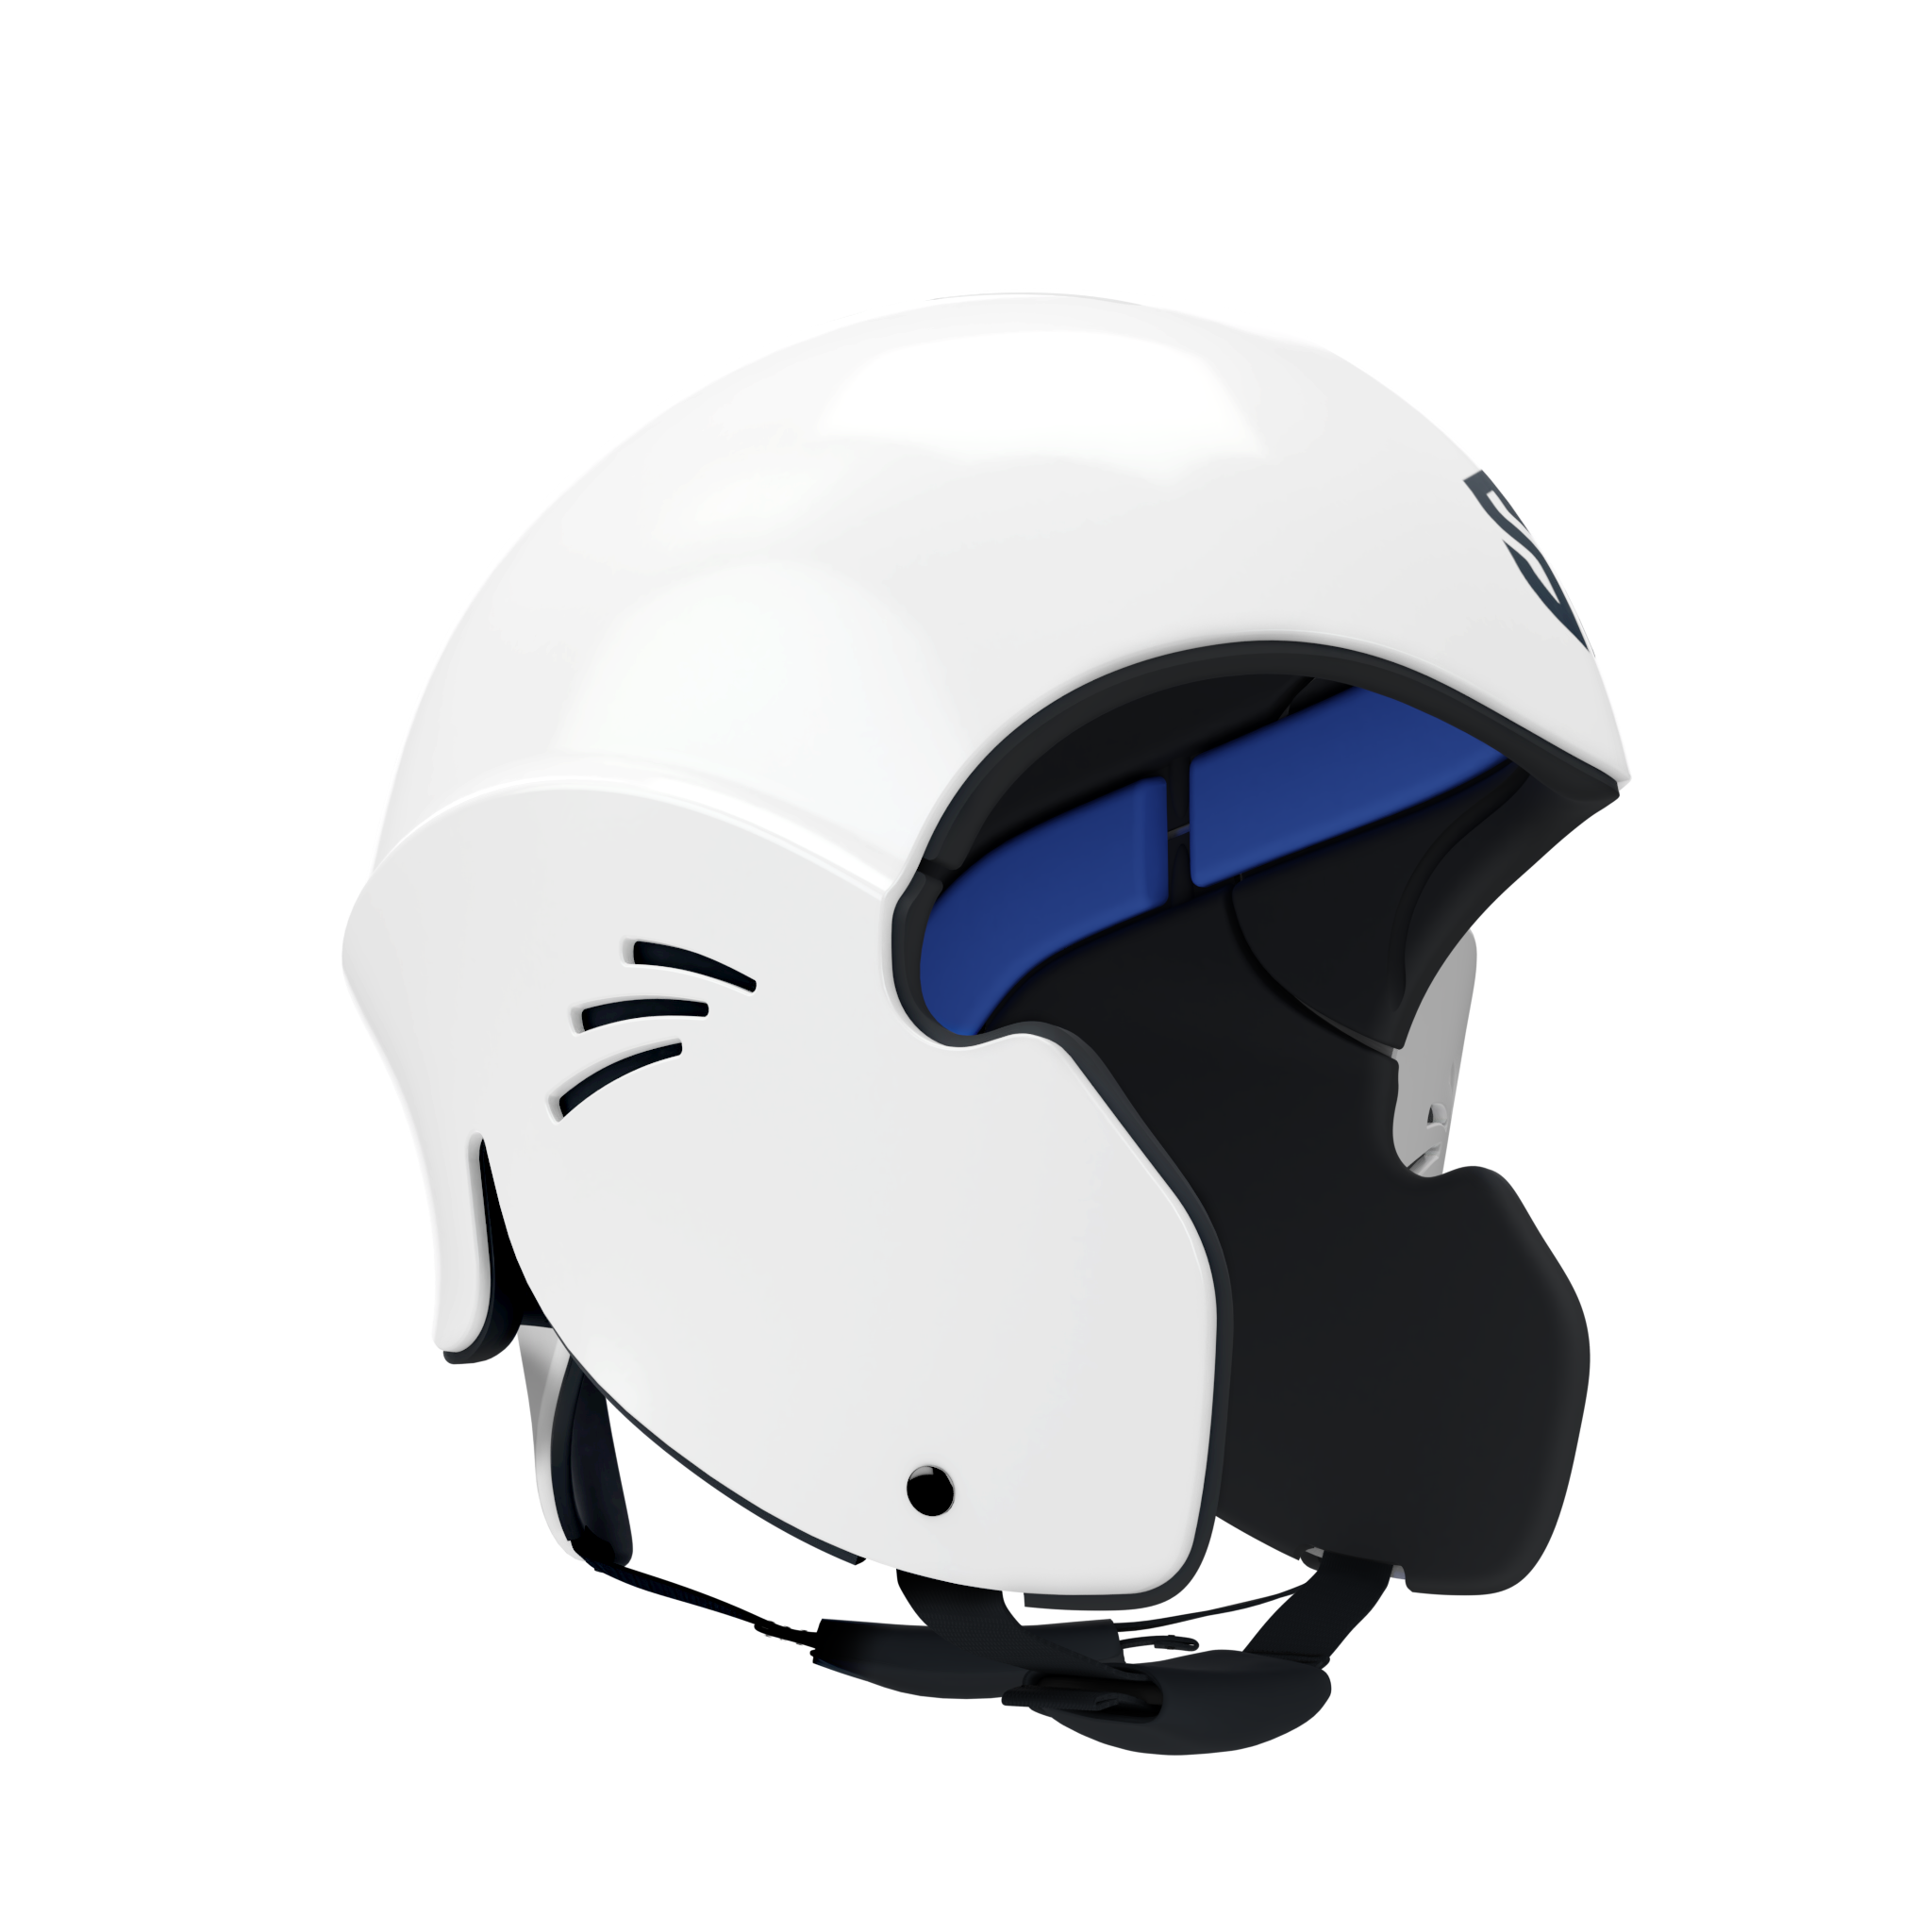 Simba S1 Wingfoil Helmet